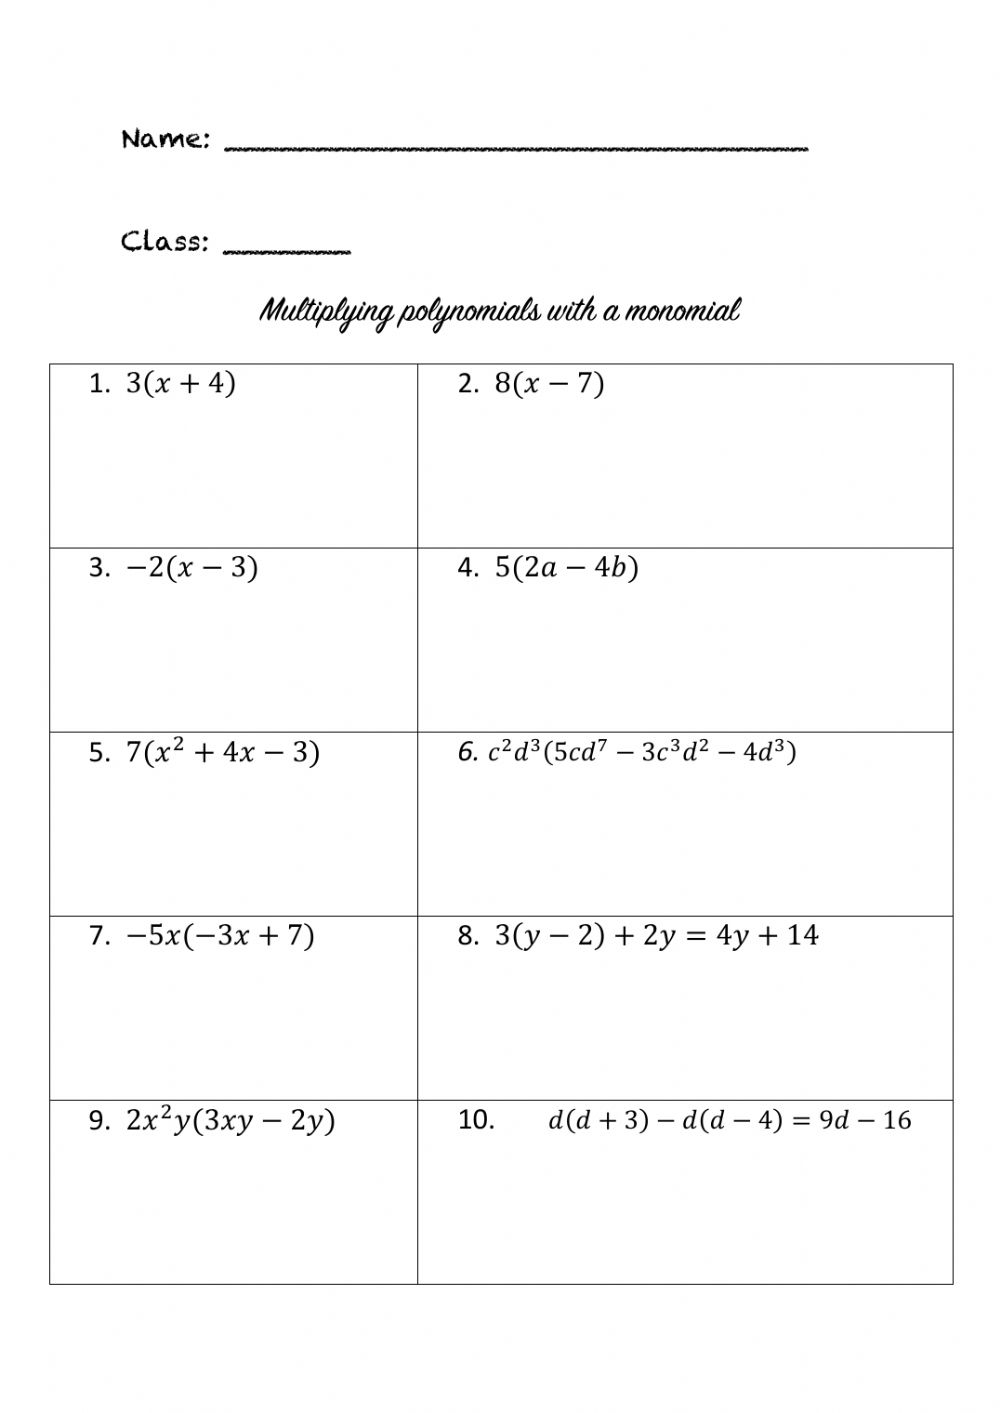 multiplication-of-polynomials-worksheets-printable-worksheets